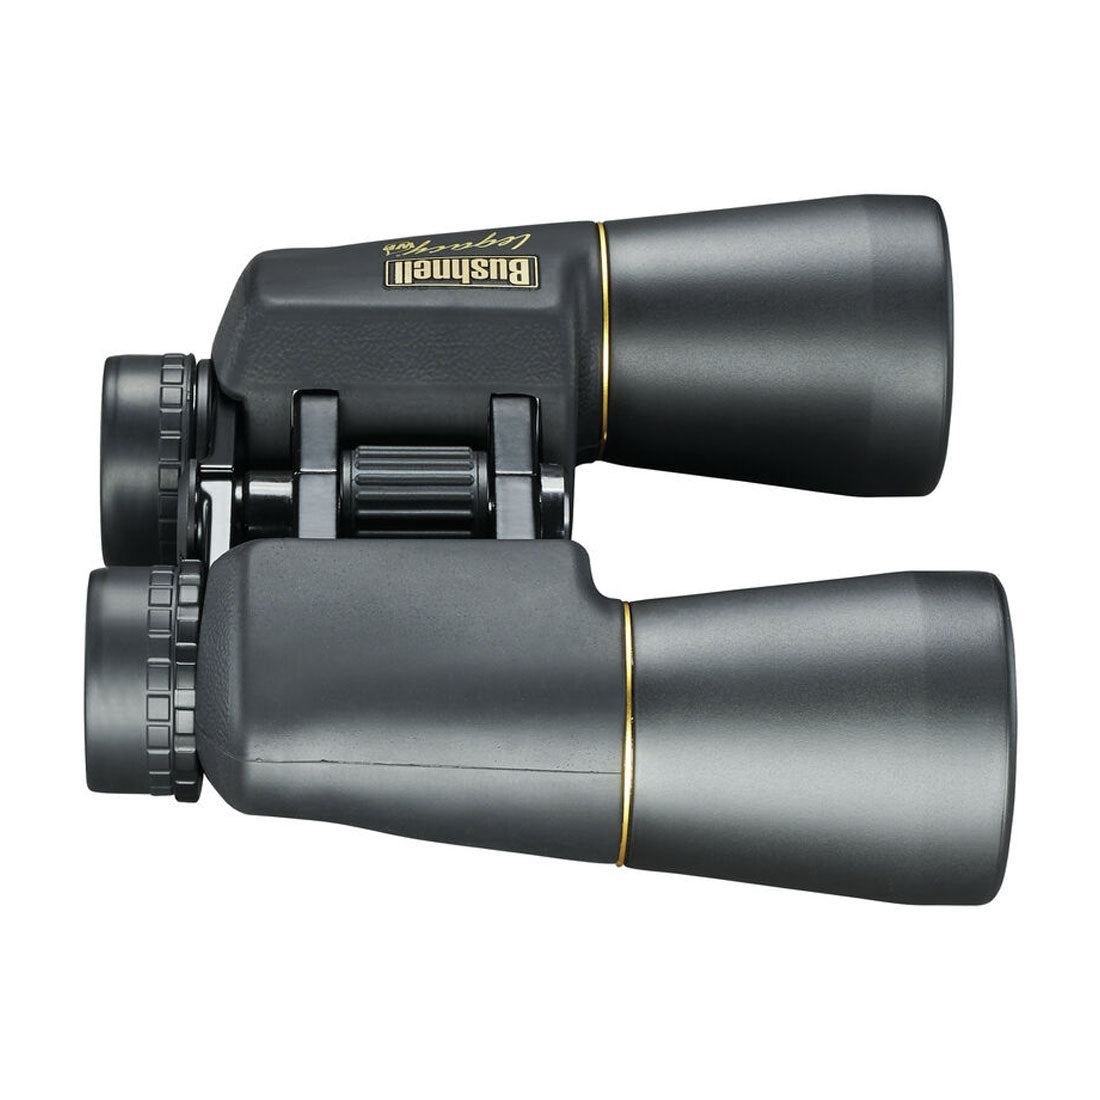 Bushnell 12-0150 Legacy 10x50 Binoculars